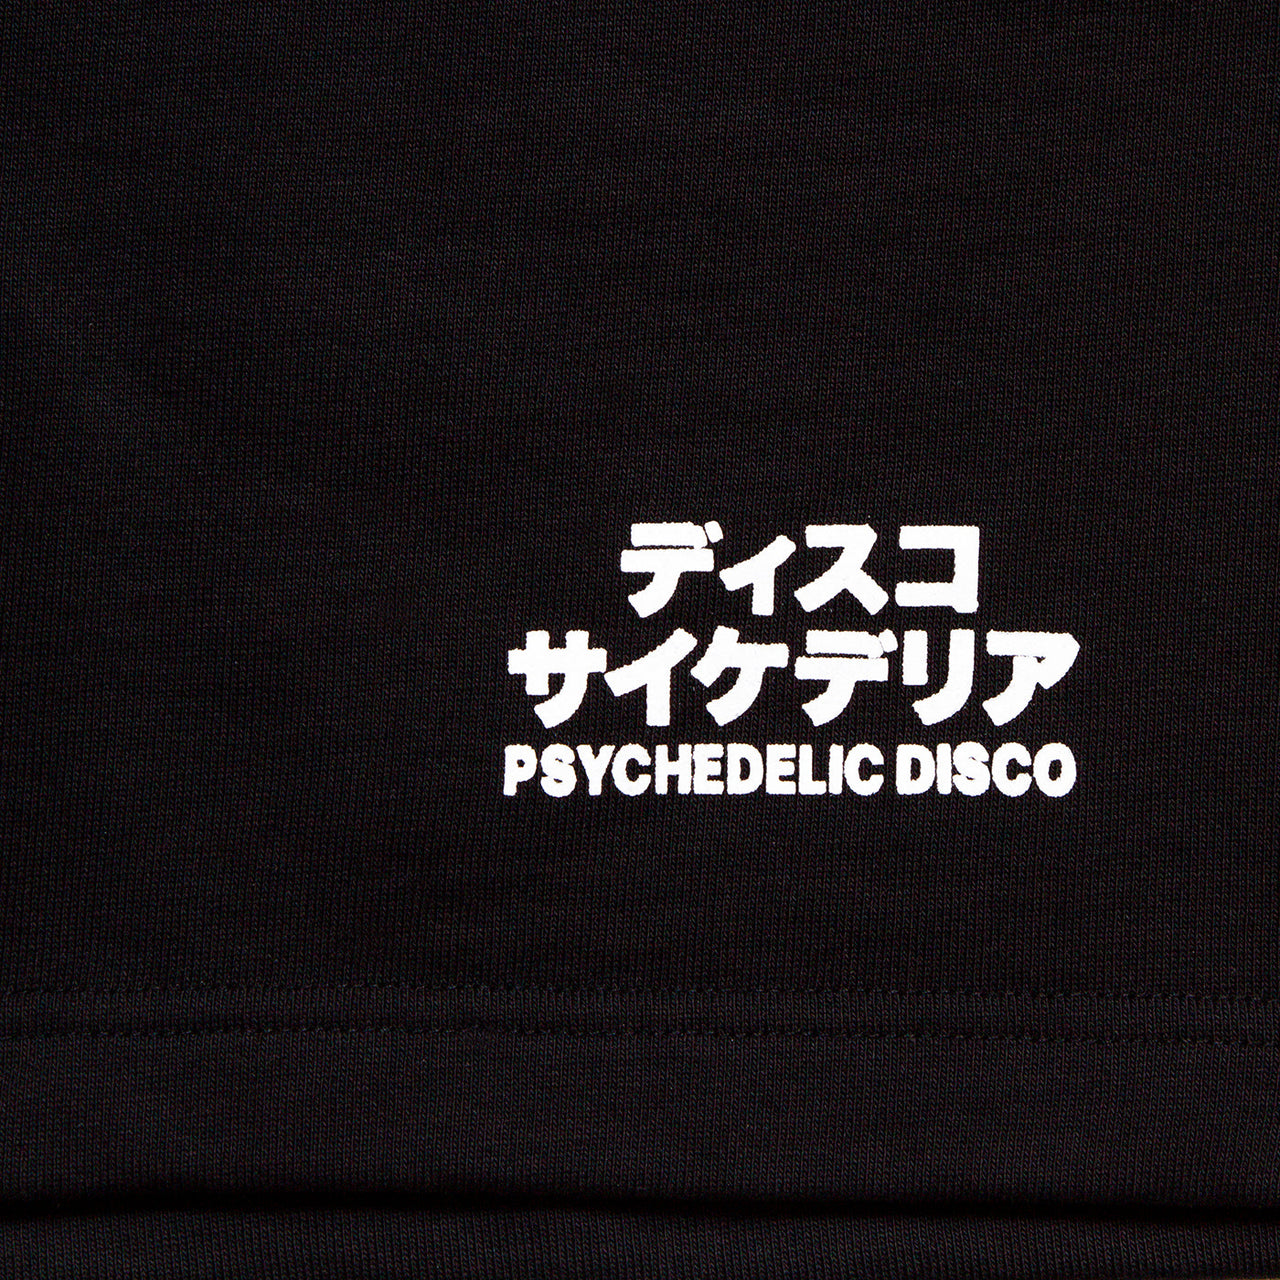 Disco Psychedelia - Jersey Shorts - Black